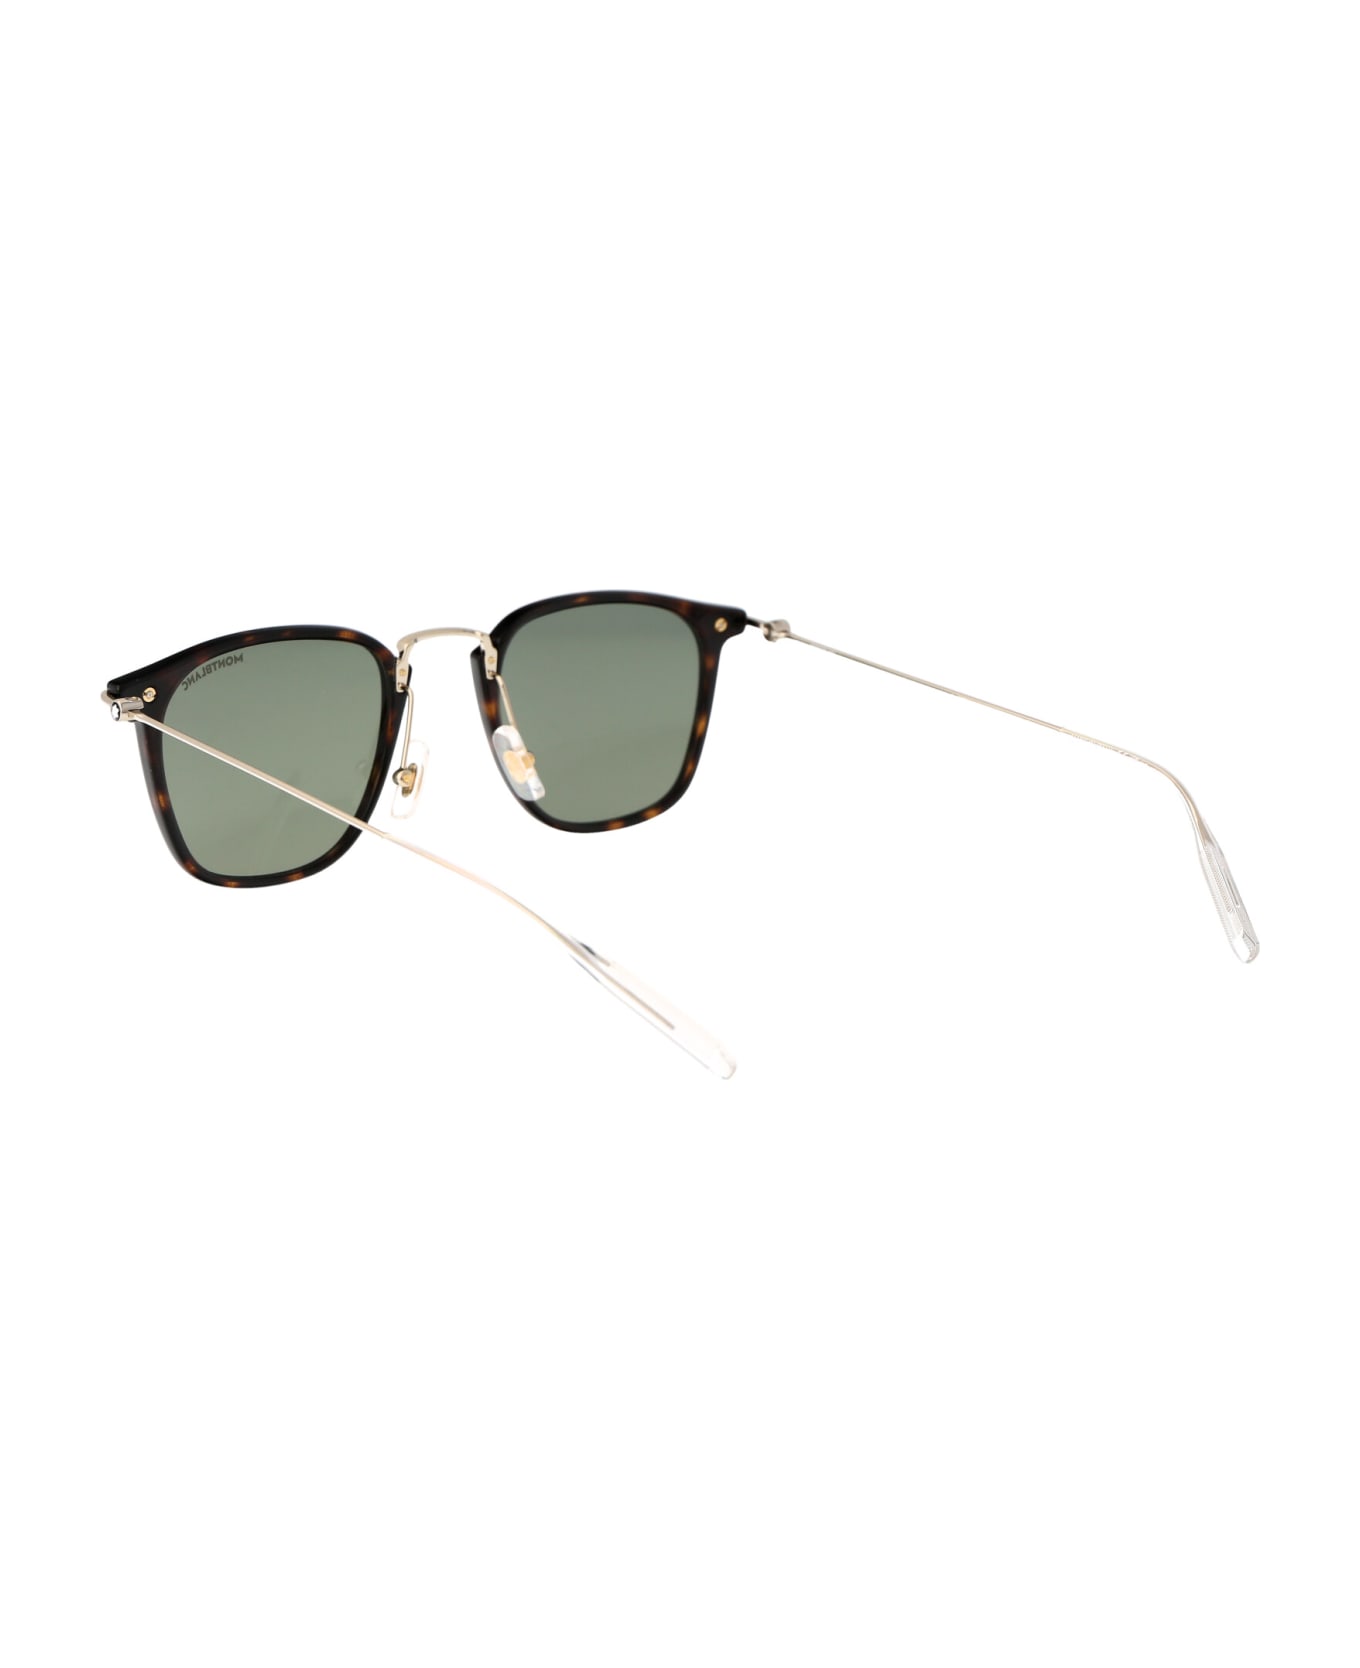 Montblanc Mb0295s Sunglasses - 002 HAVANA GOLD GREEN サングラス